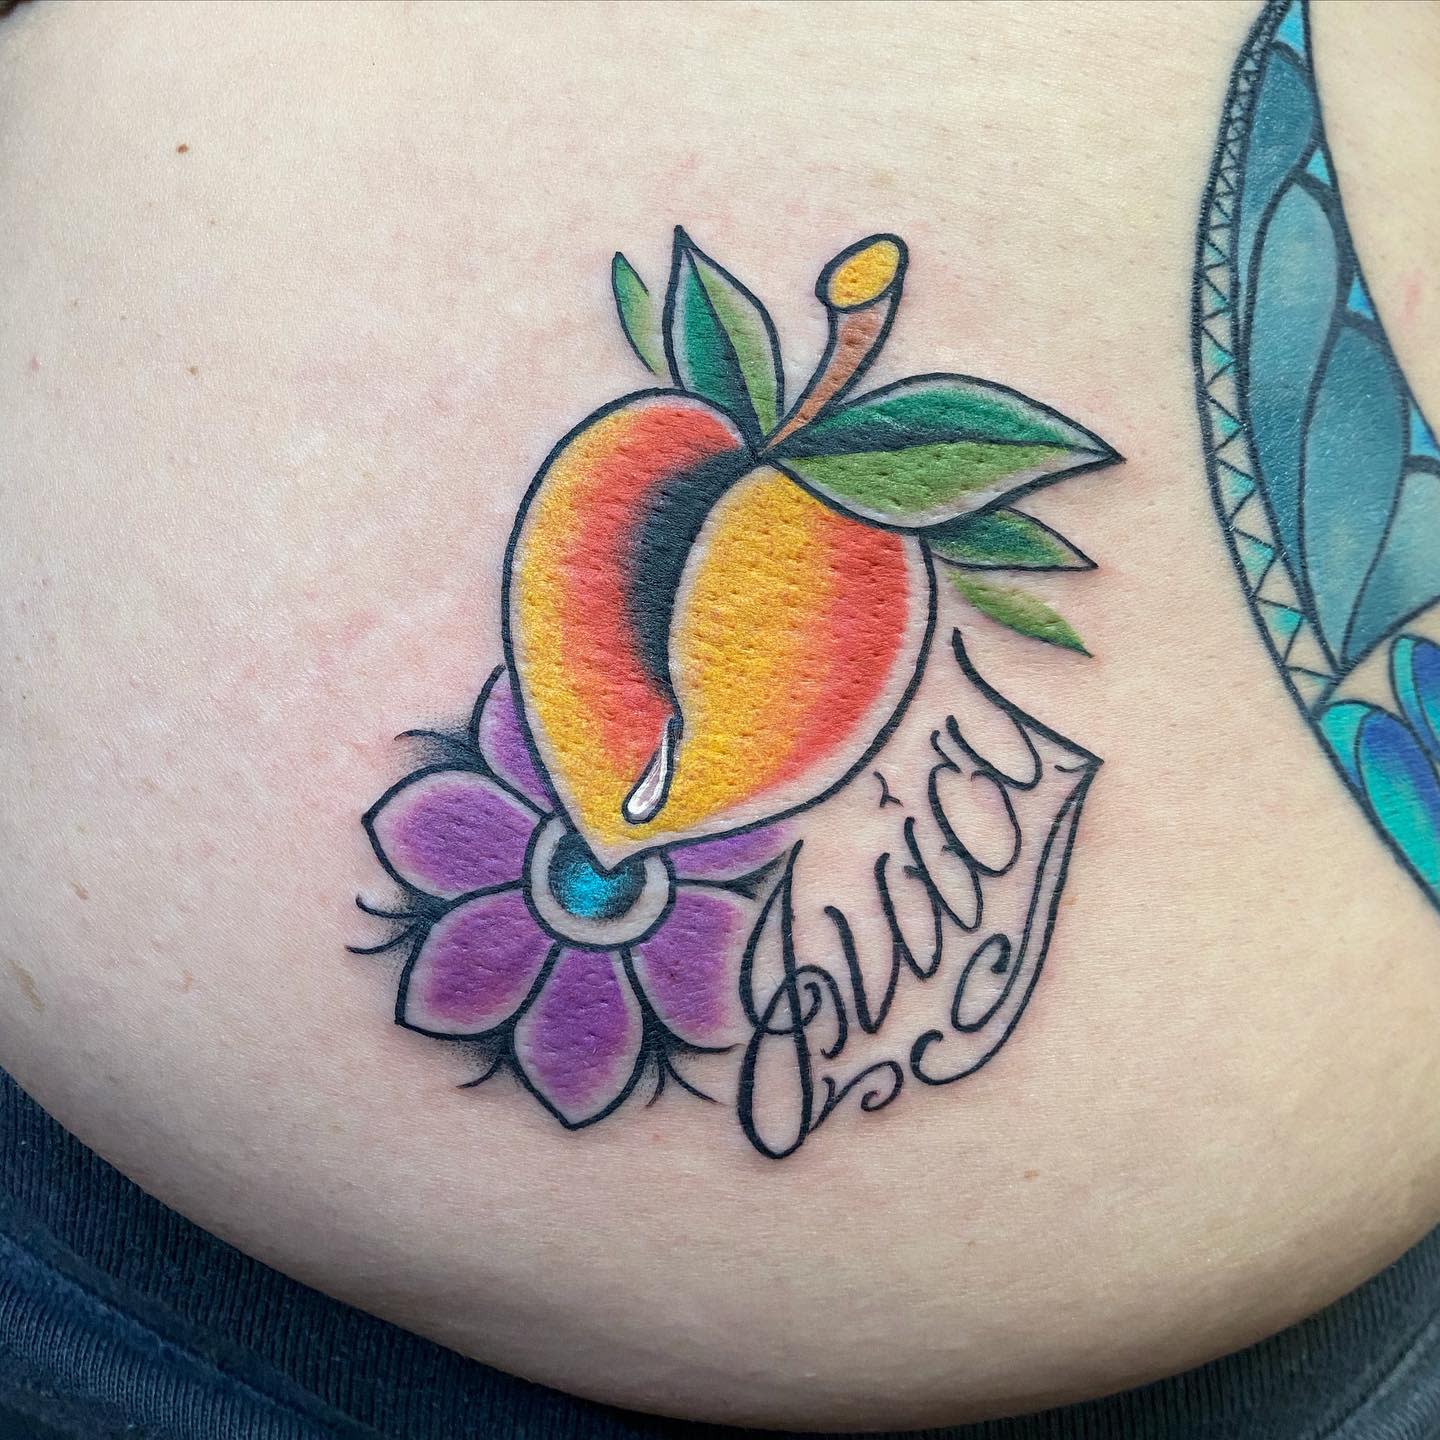 Tattoo tagged with mj small vegan emoji micro symbols peach tiny  food ifttt little nature fruit other illustrative sketch work inner  arm  inkedappcom